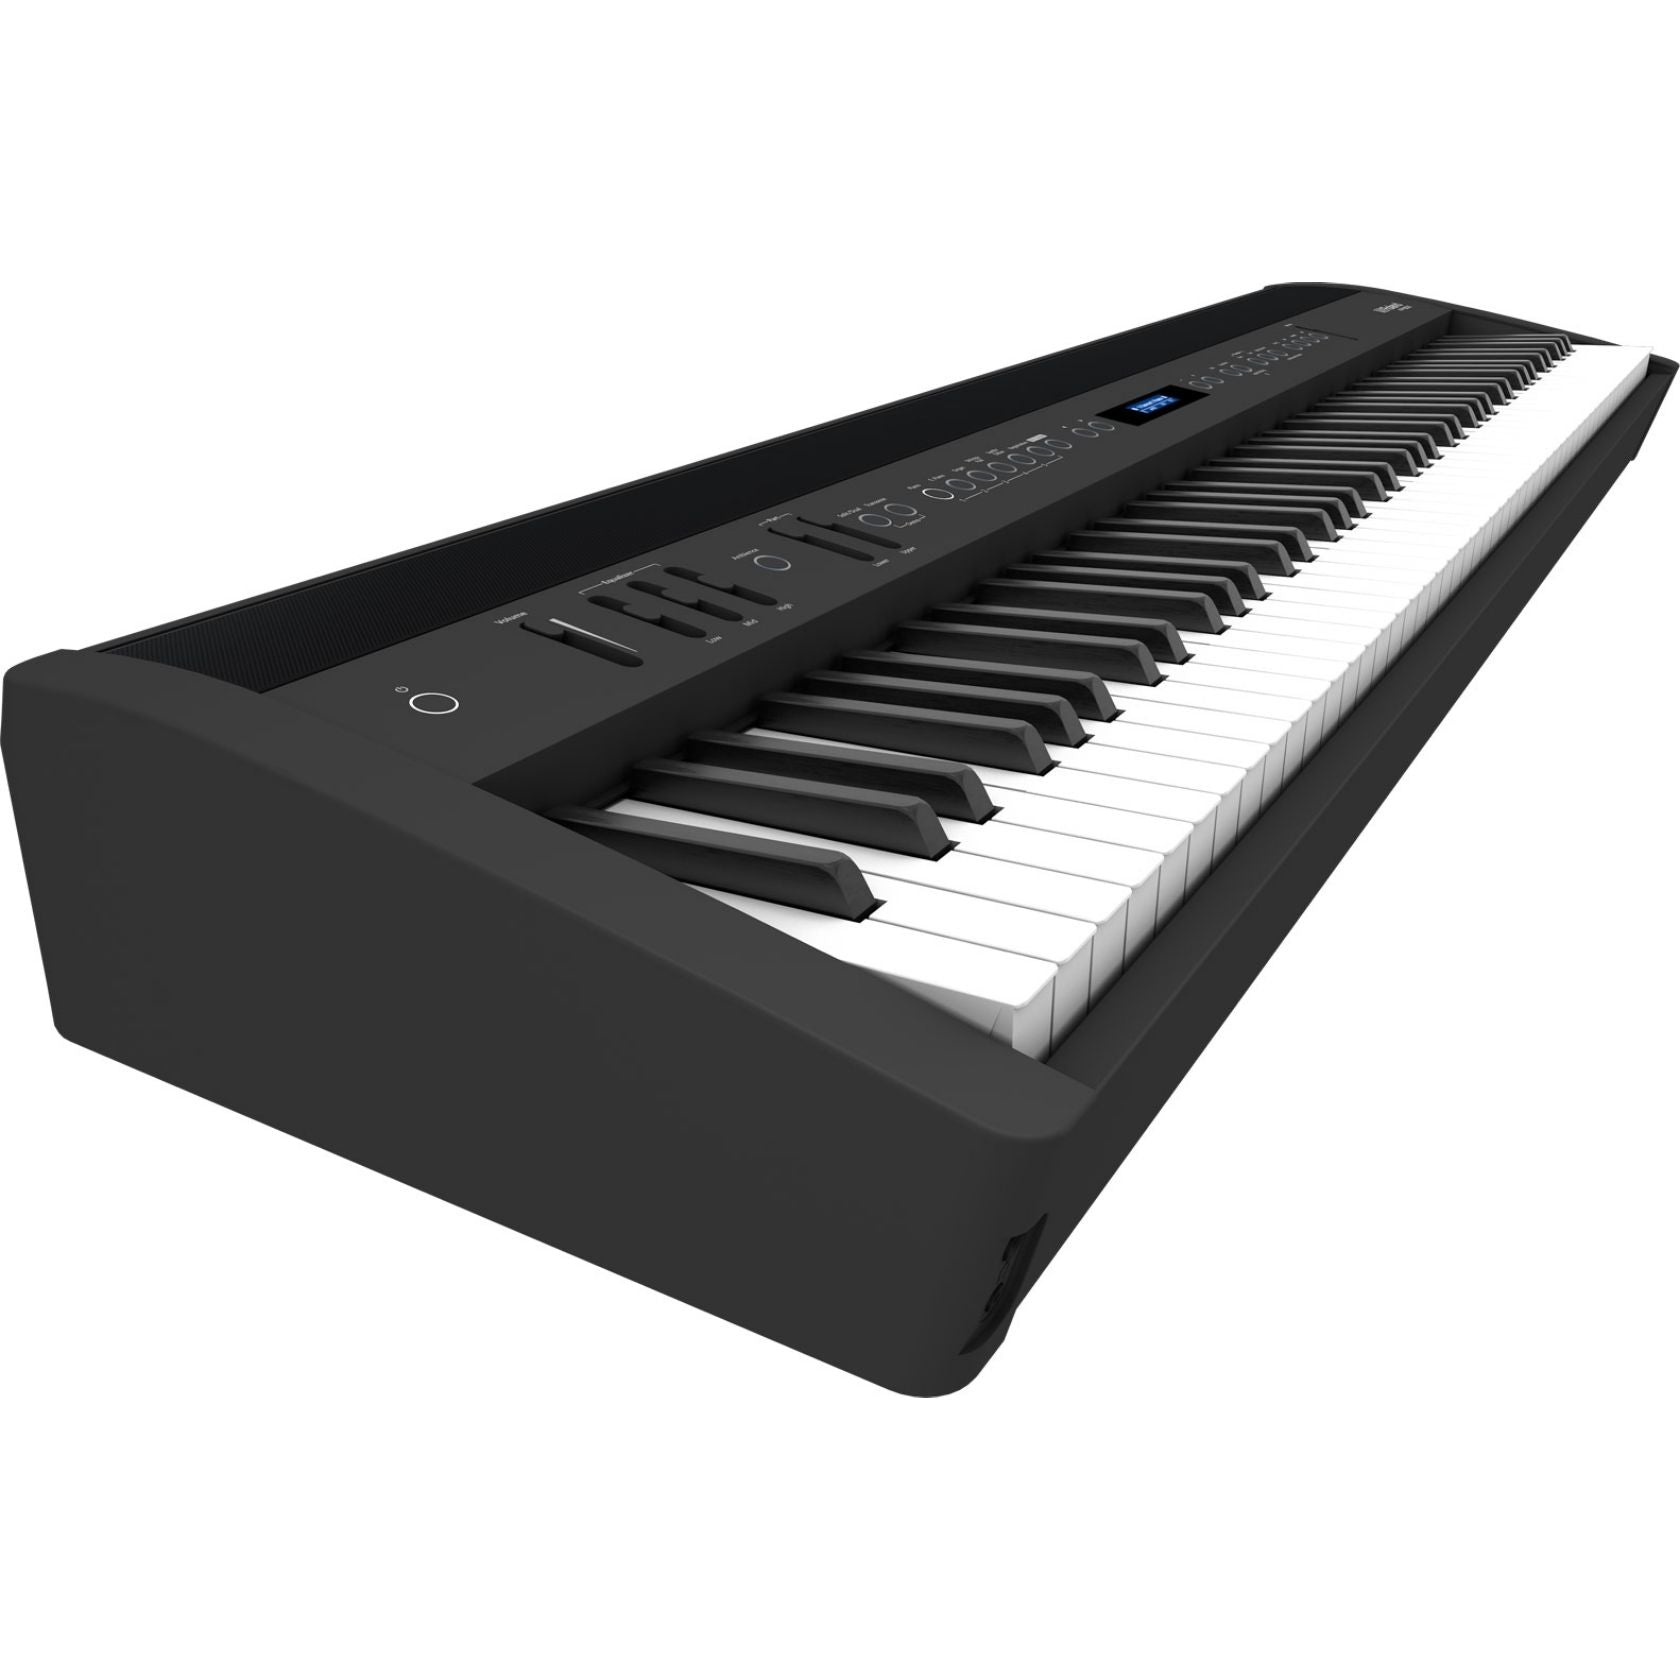 Roland FP-60X Digital Piano + Free Headphones worth $85